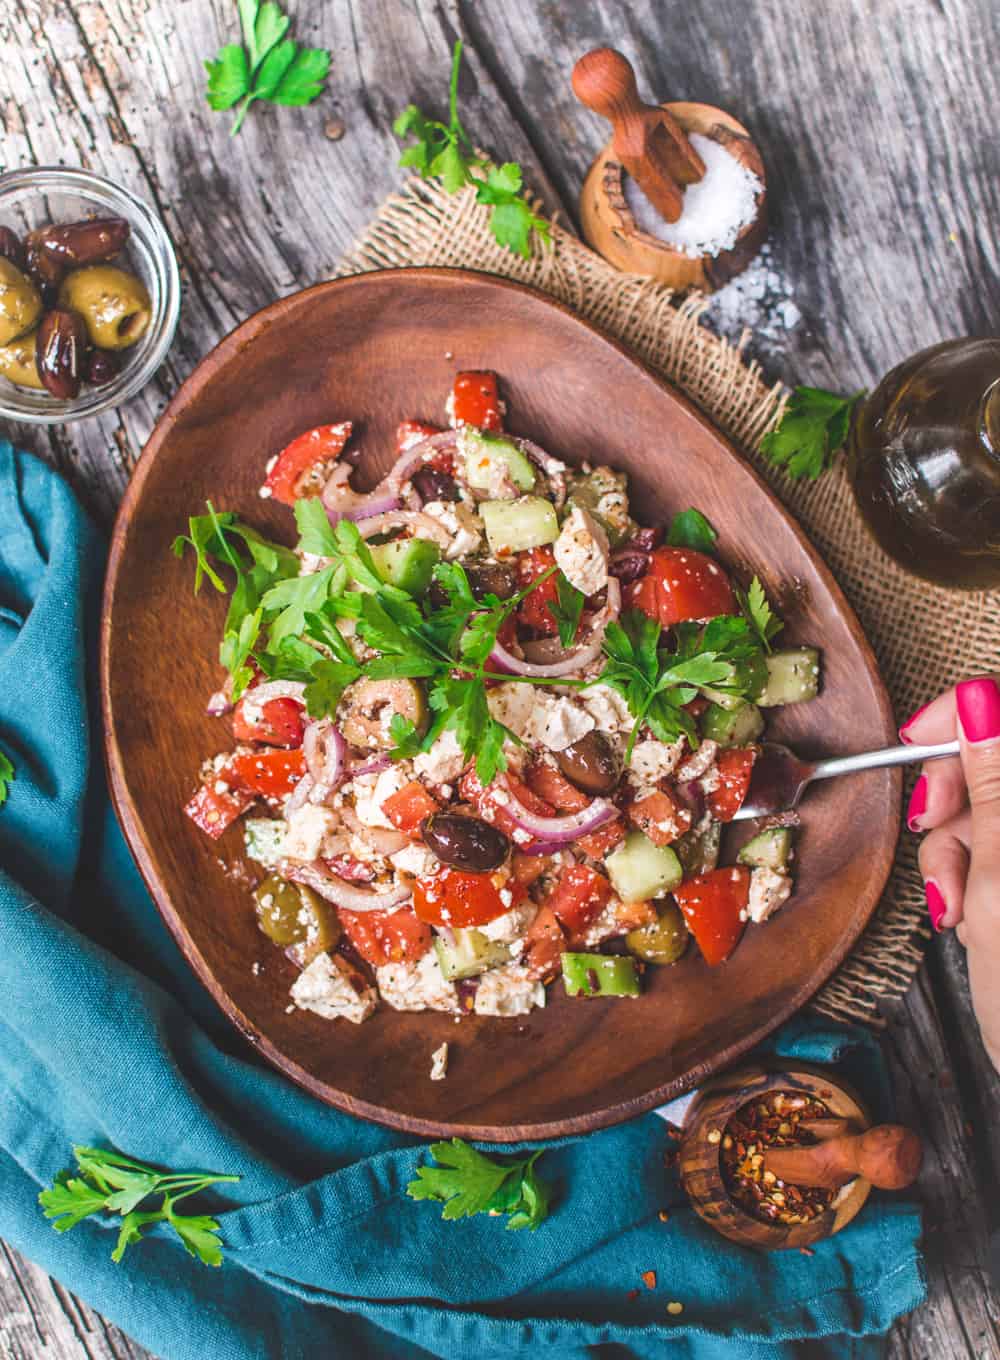 Vegan Greek Salad with Mediterranean Marinate Tofu | World of Vegan | #greek #salad #feta #tofu #marinated #mediterranean #worldofvegan